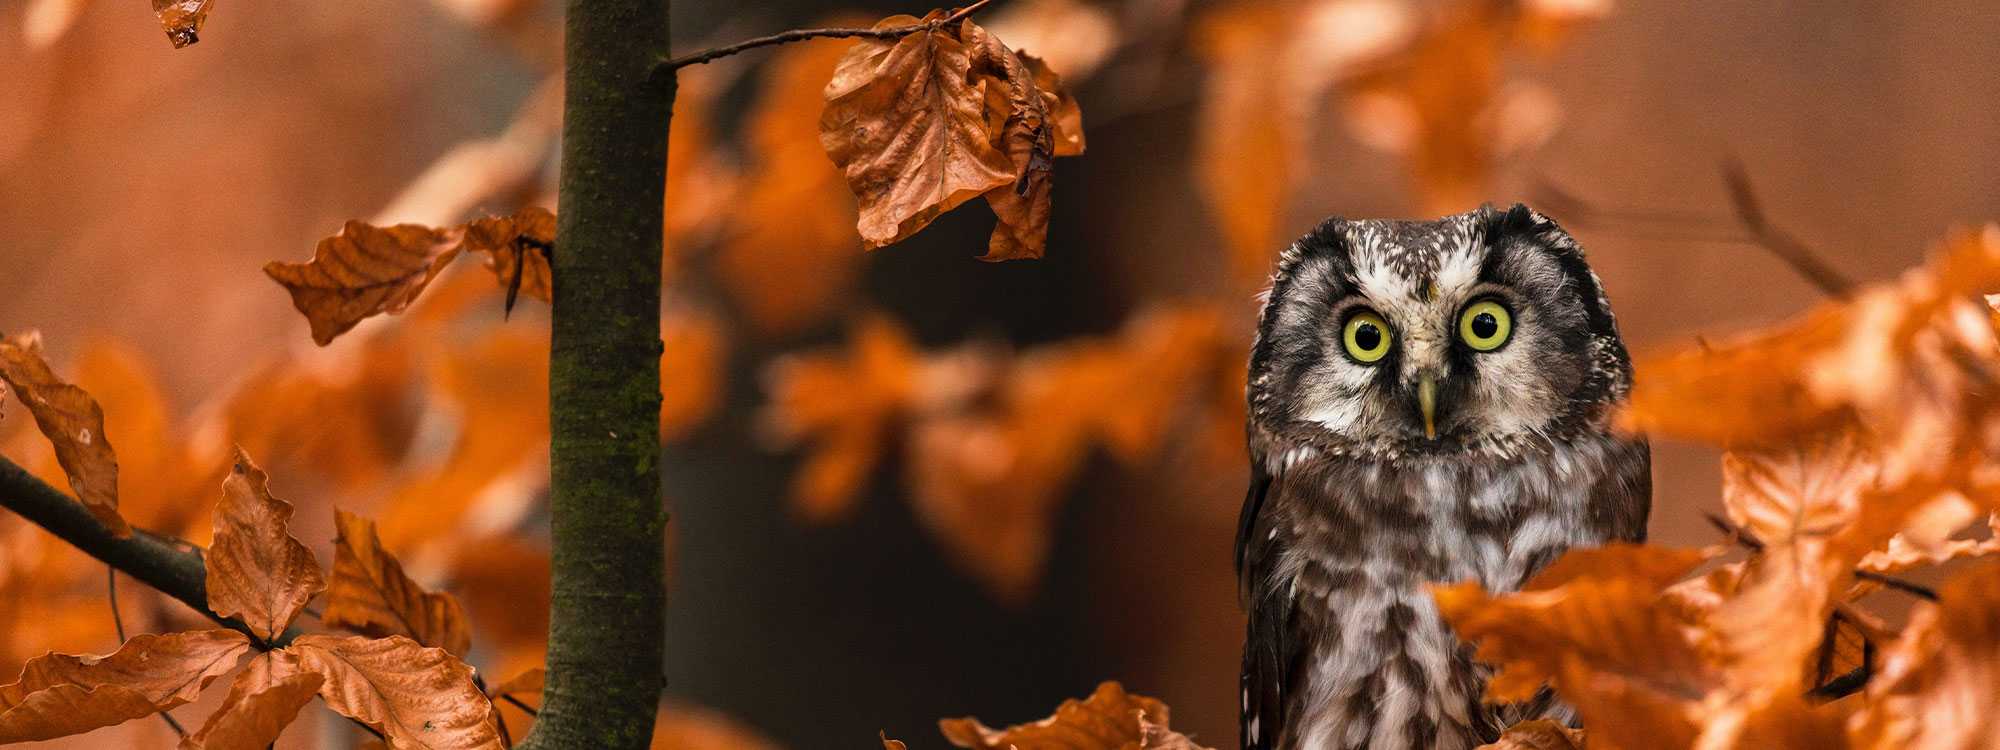 Grey owl in a tree